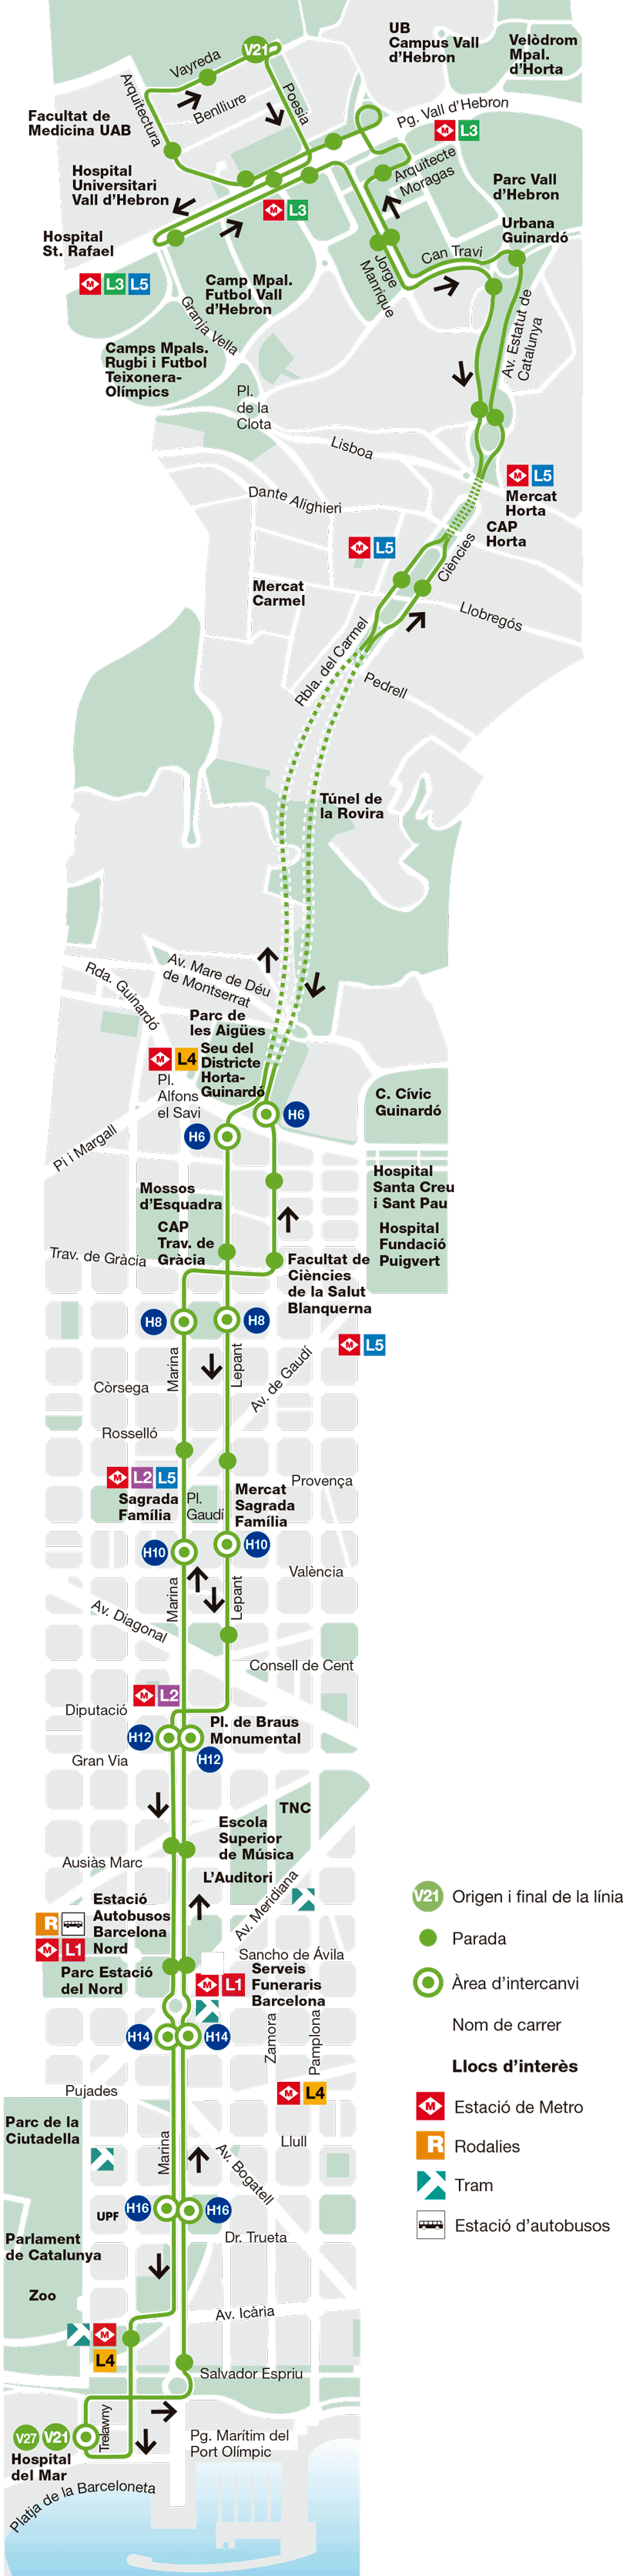 Mapa bus Barcelona línea V21 2014